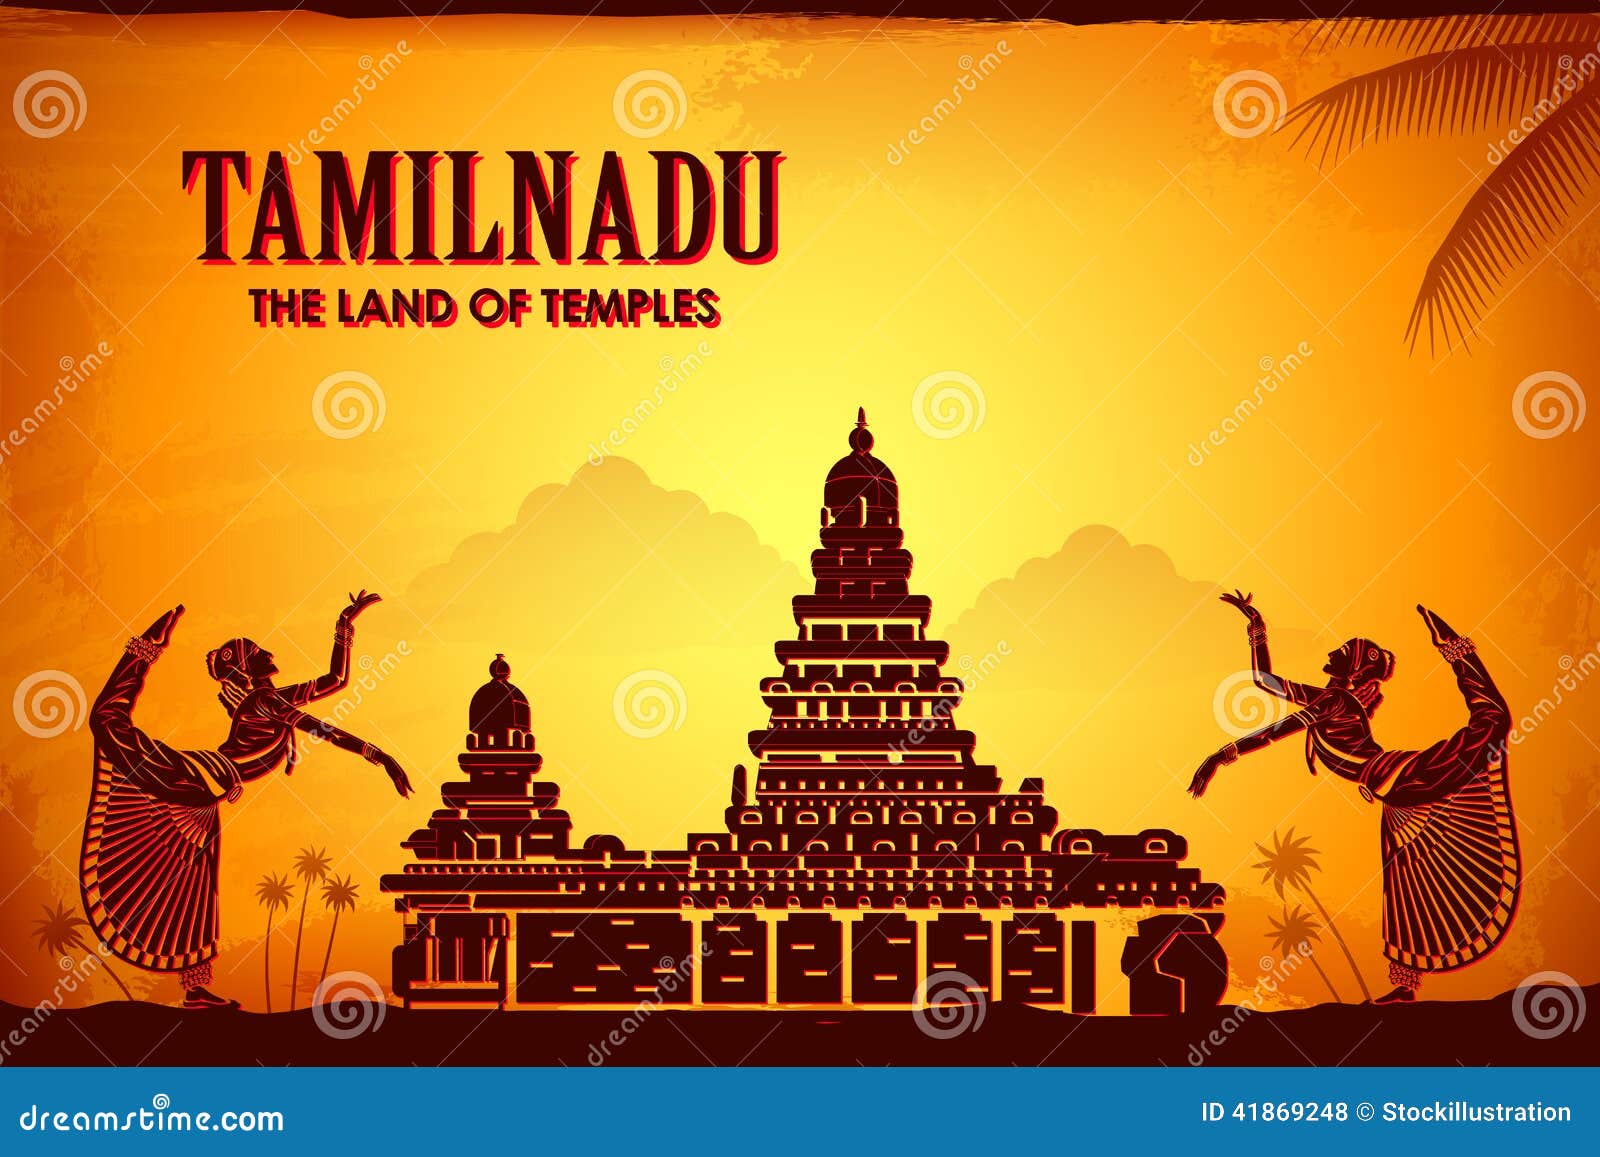 culture of tamilnadu